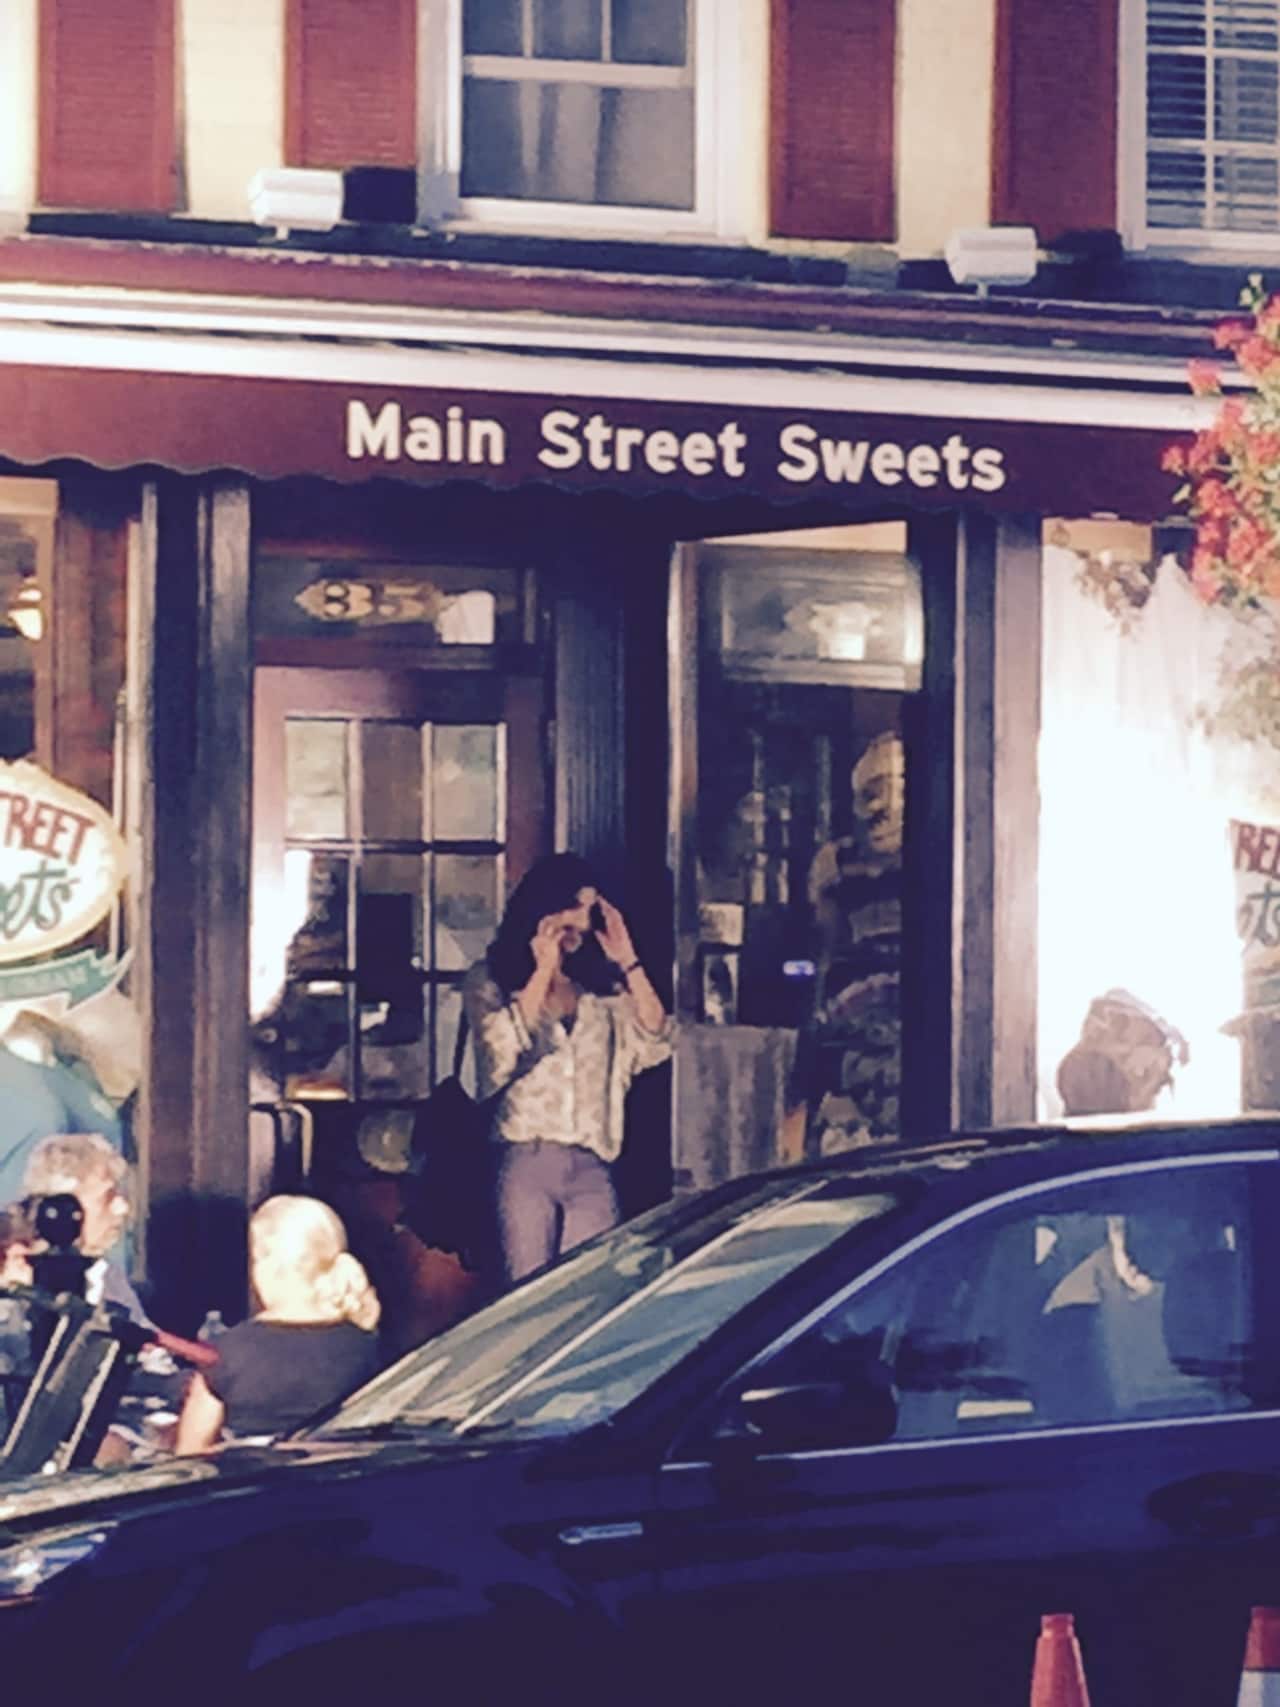 Priyanka Chopra, star of "Quantico," outside Main Street Sweets in Tarrytown.